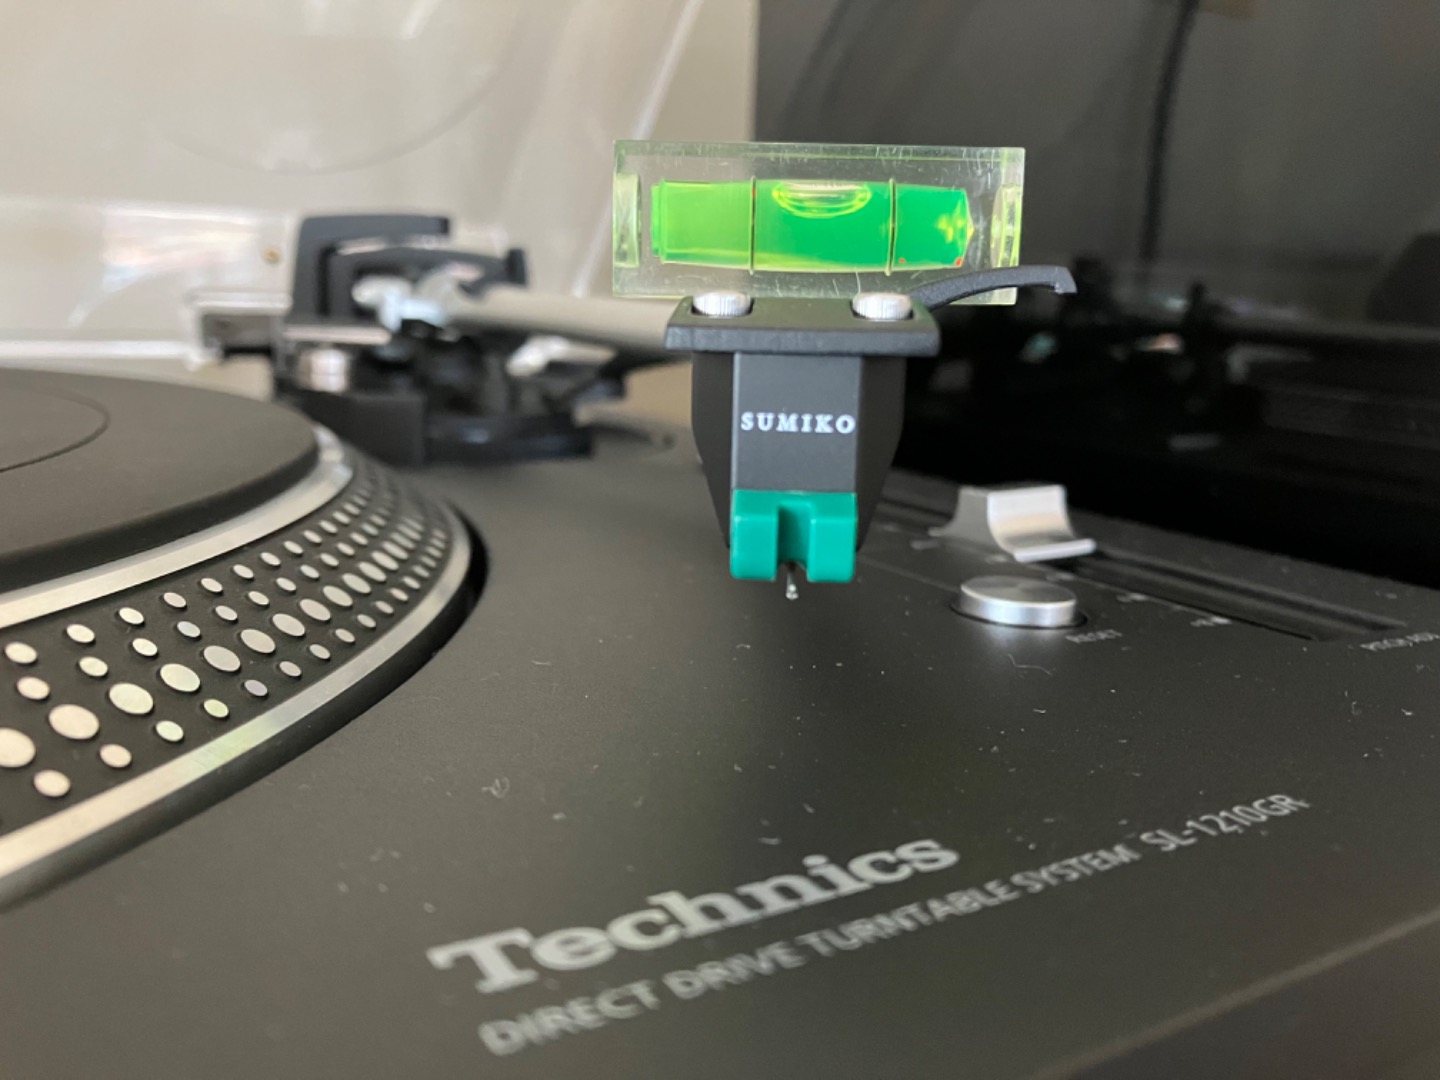 Technics SL-1200GR turntable, for DJs or audiophiles or both? - CNET